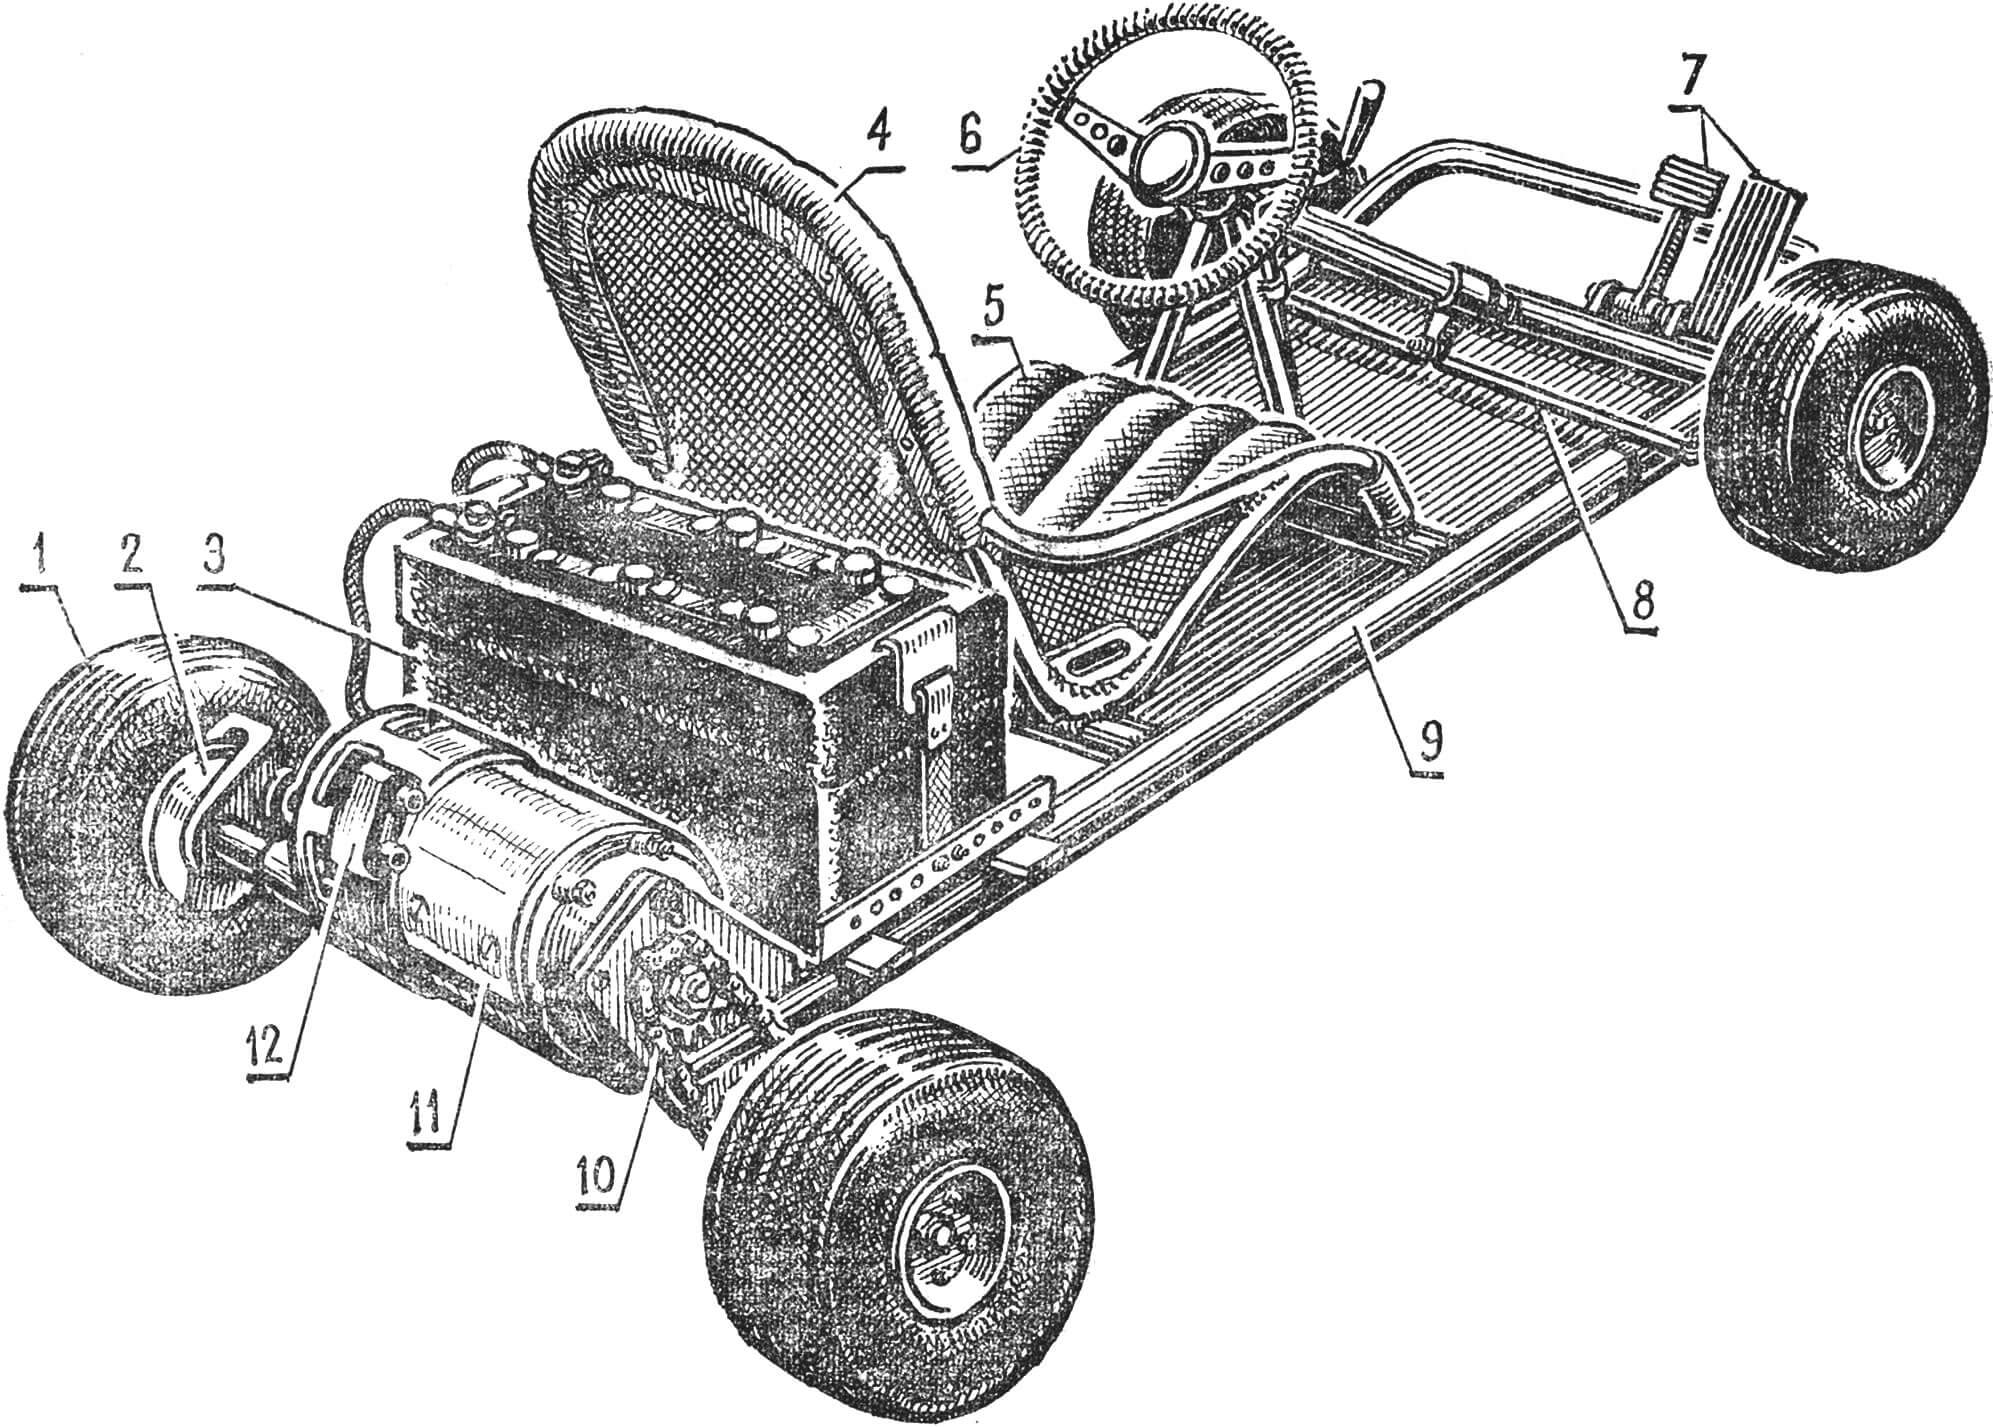 Fig. 1. Electric Kart